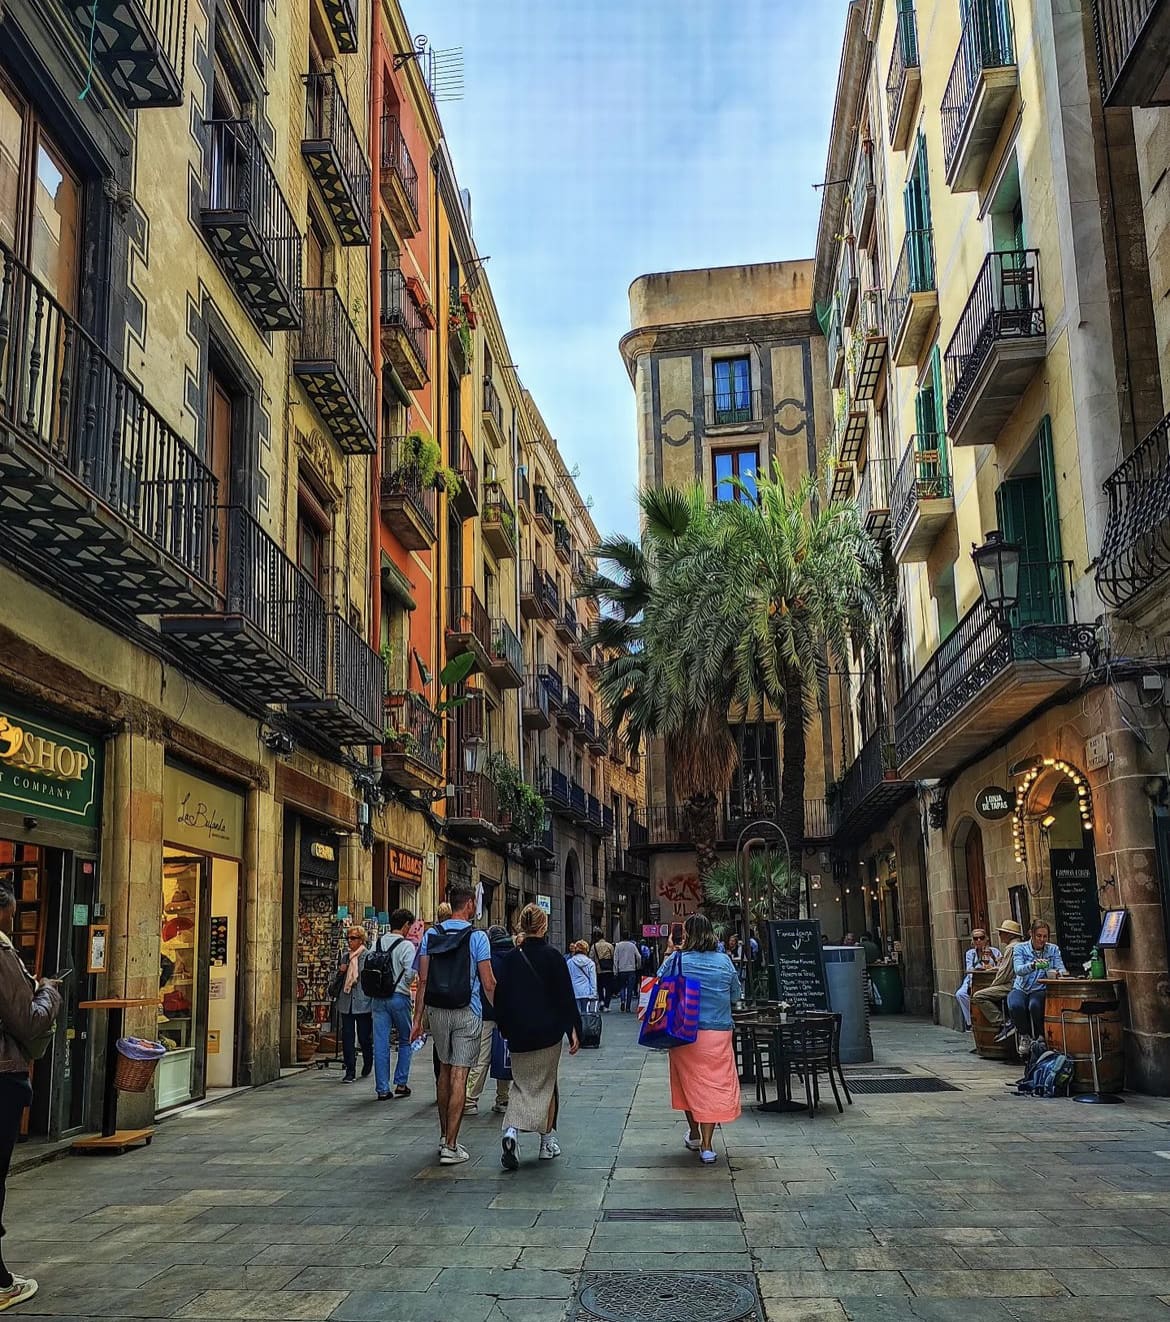 An iconic Spanish city scene